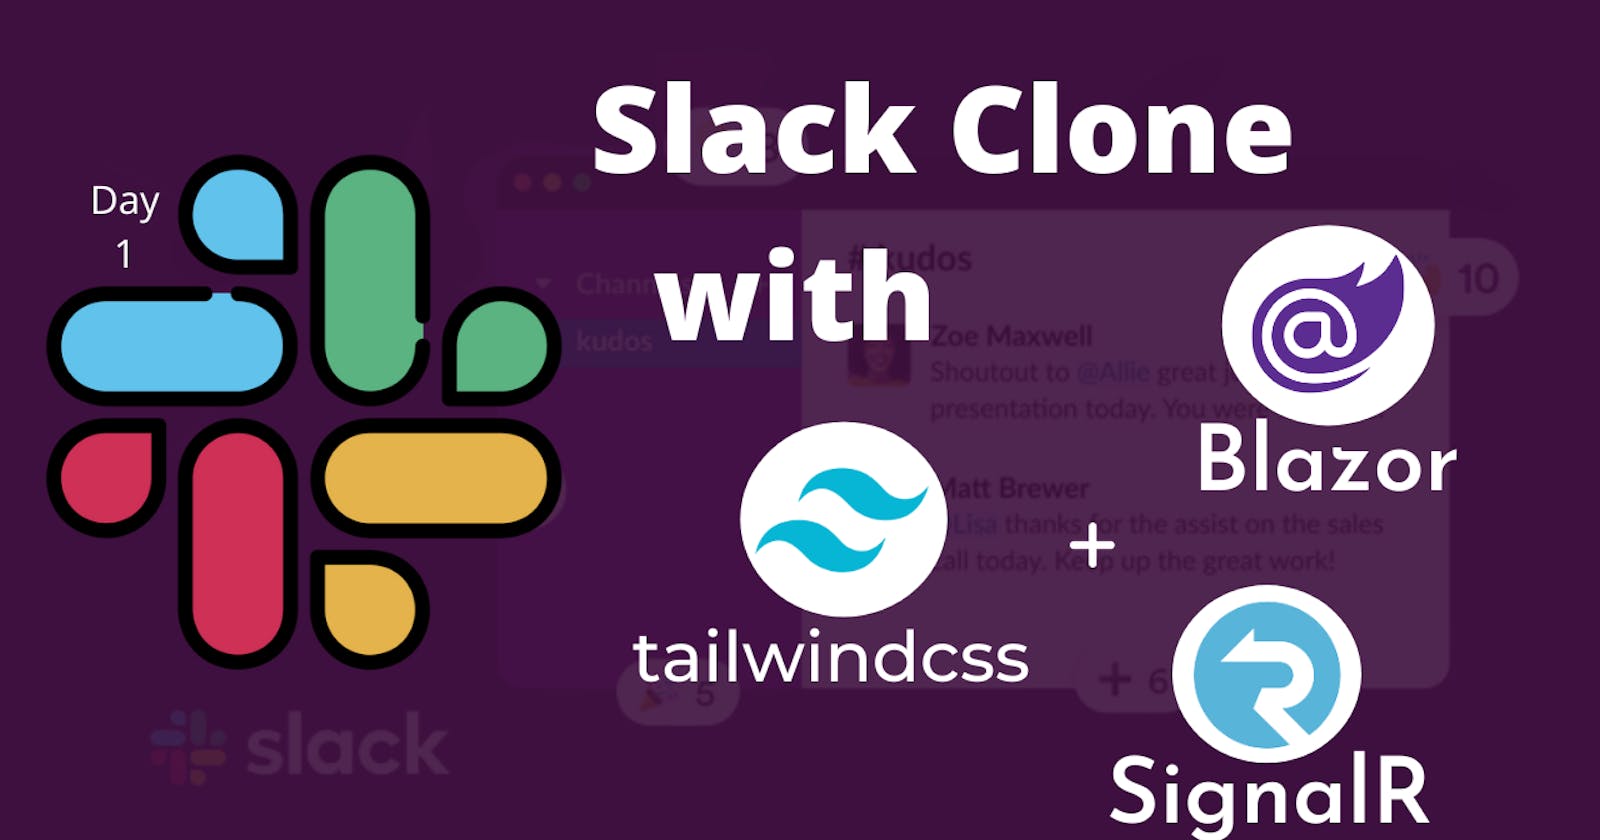 SLACK CLONE with Blazor | SignalR | TailwindCSS 
- Day 1 (Set Up)